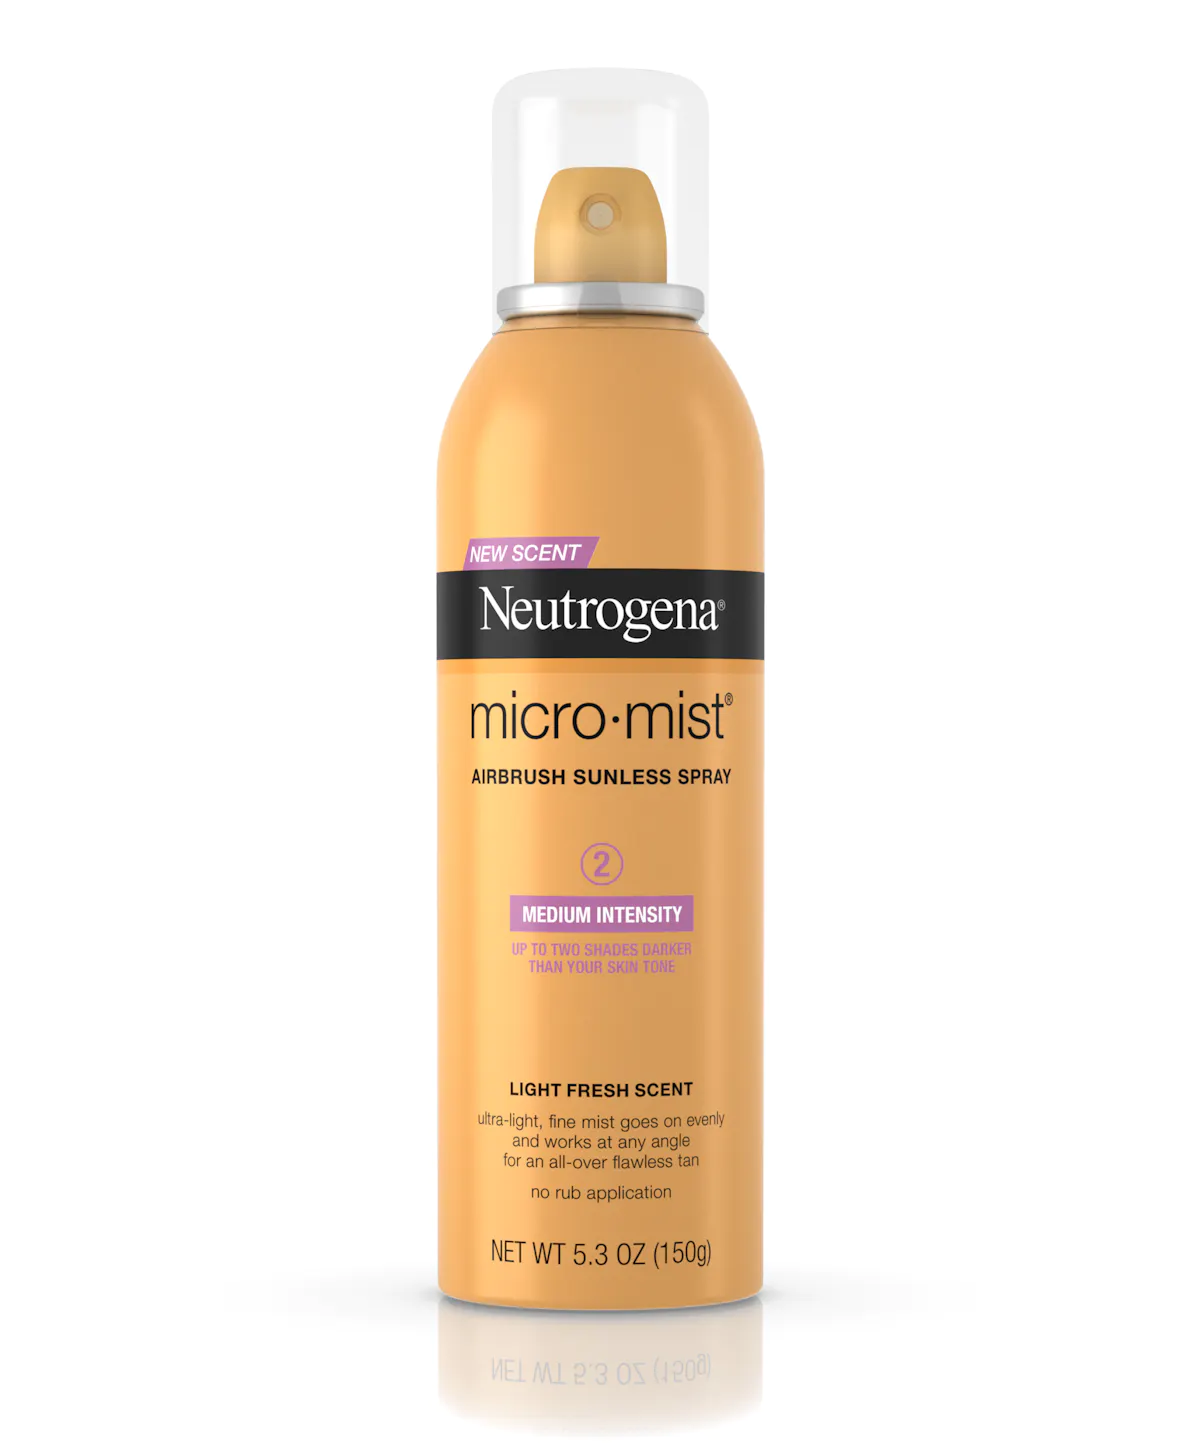 Neutrogena Micromist Airbrush Sunless Spray